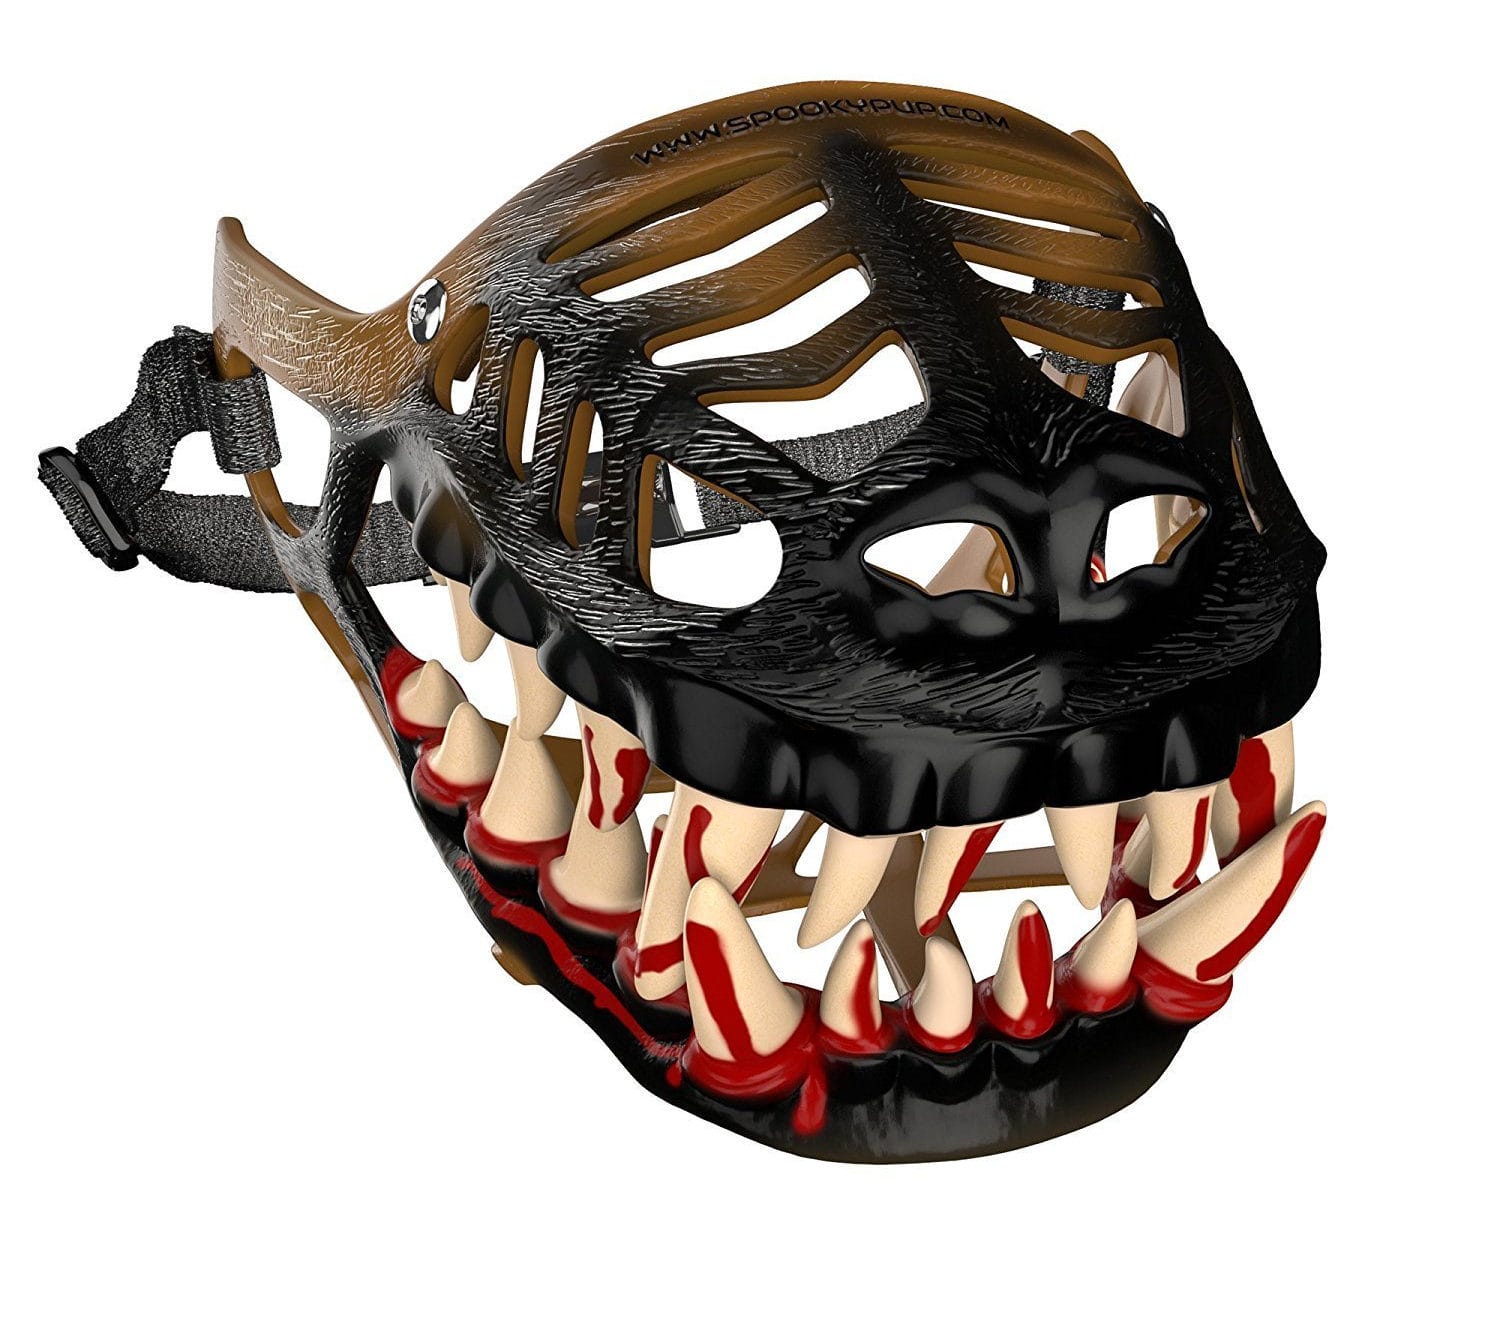 Halloween Dog Costume with Large Scary Teeth